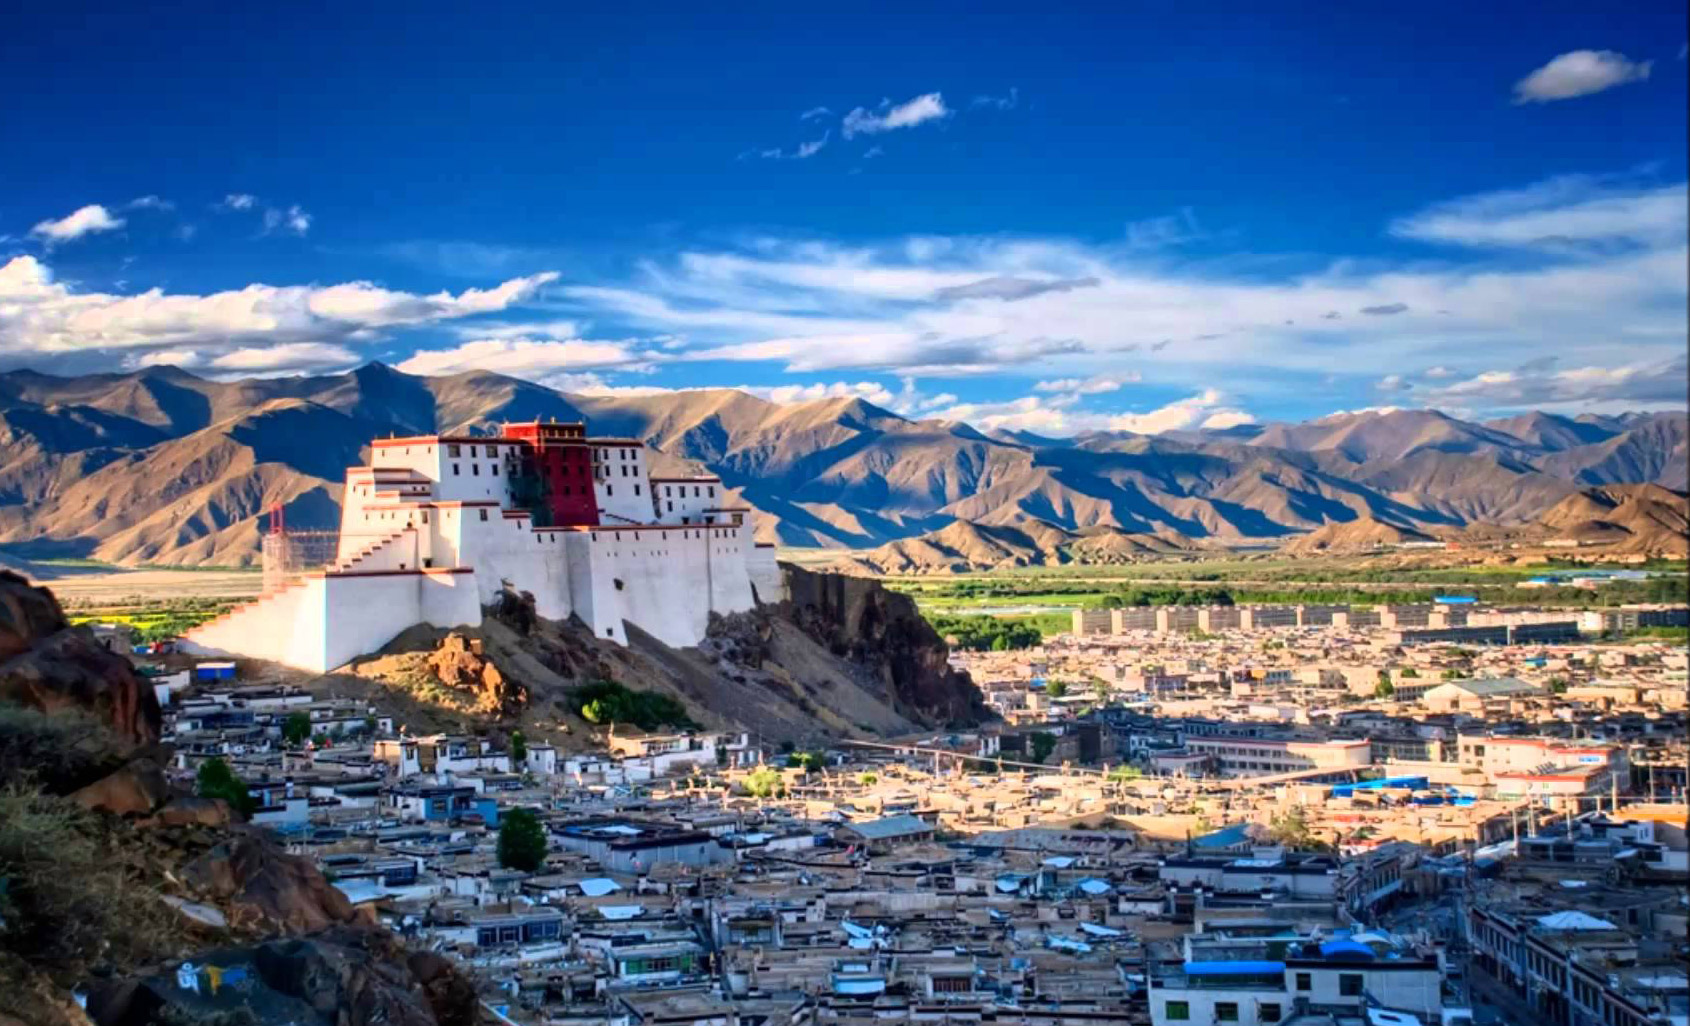 Kailash Mansarovar Yatra via Lhasa - (2019 Updated) Touch 